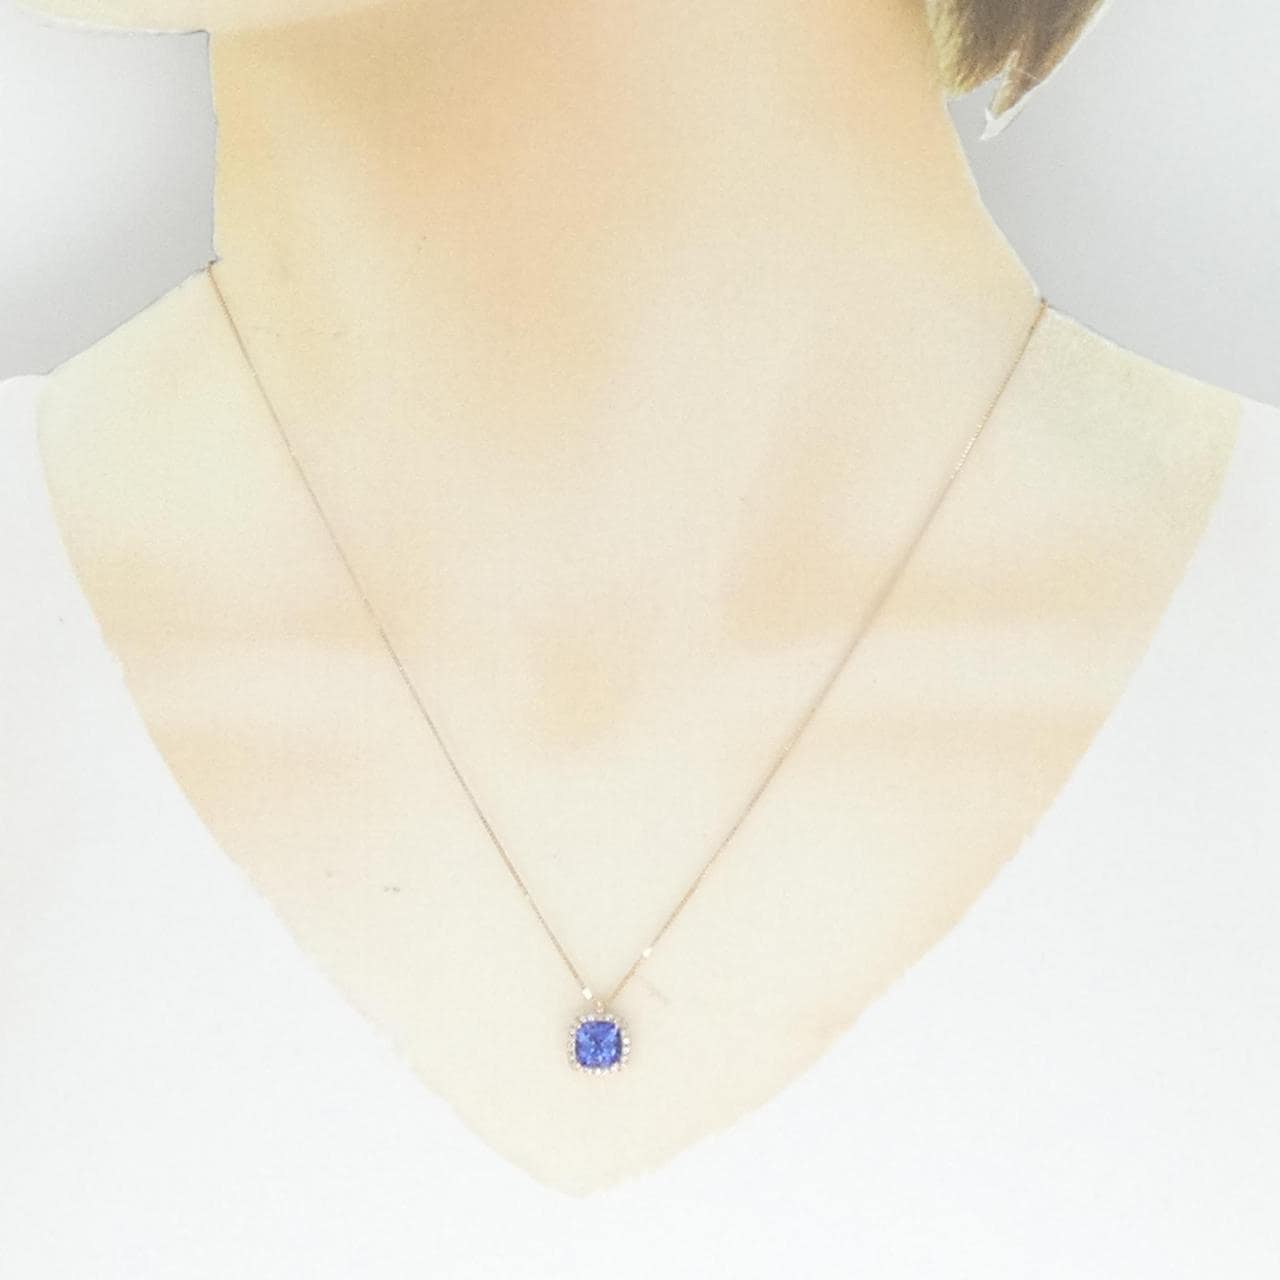 K18PG Tanzanite necklace 1.28CT